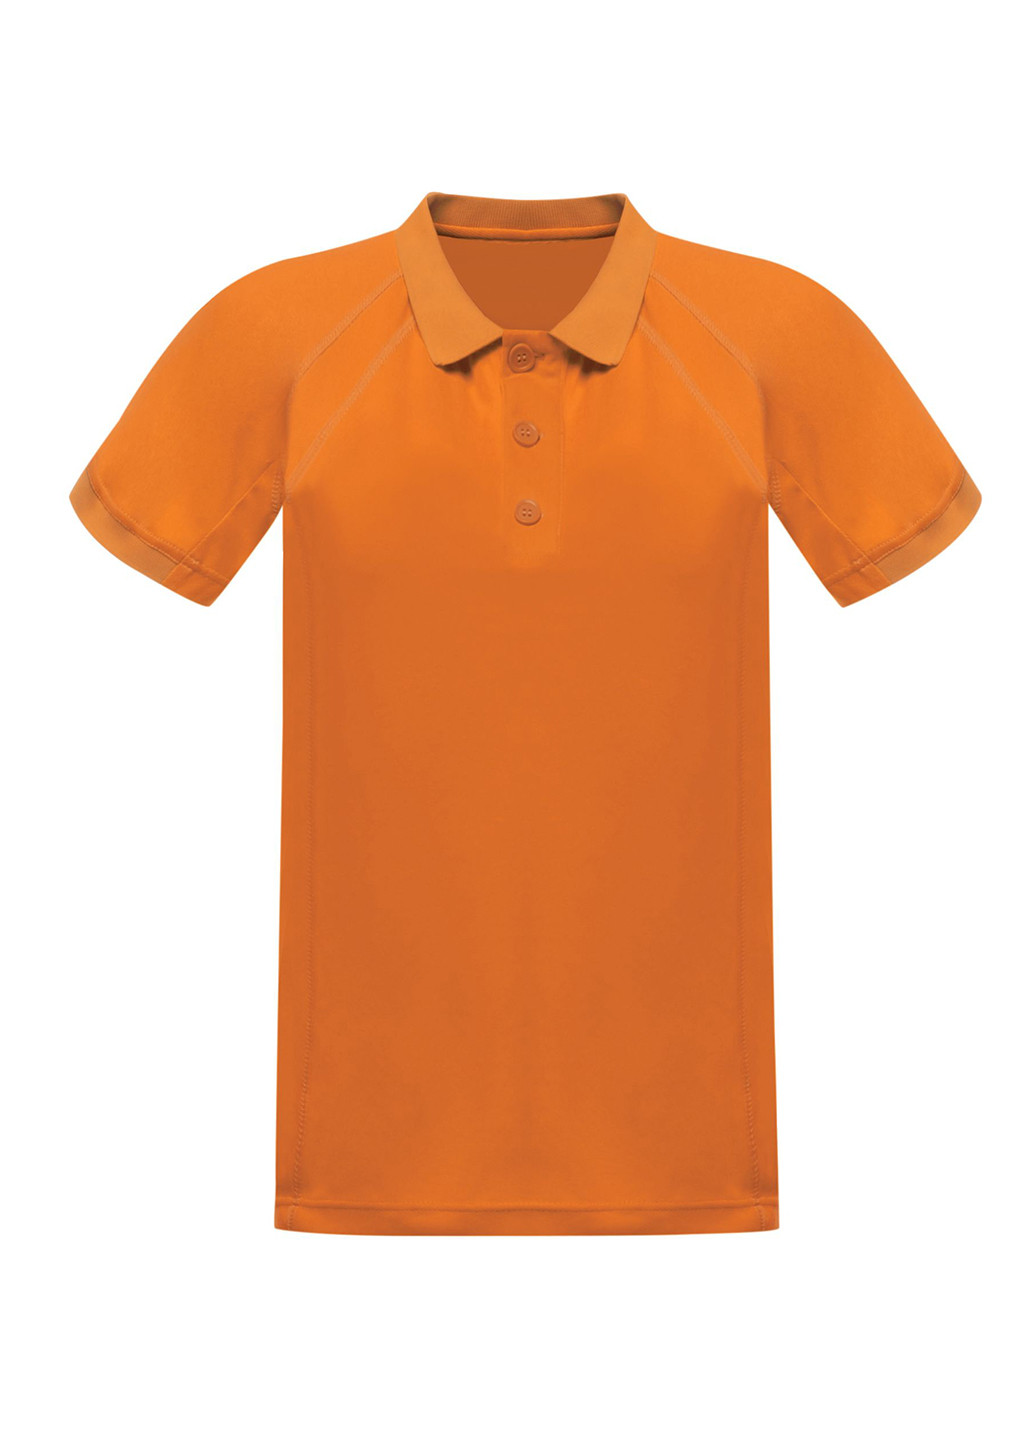 Оранжевая футболка-поло для мужчин Regatta однотонная